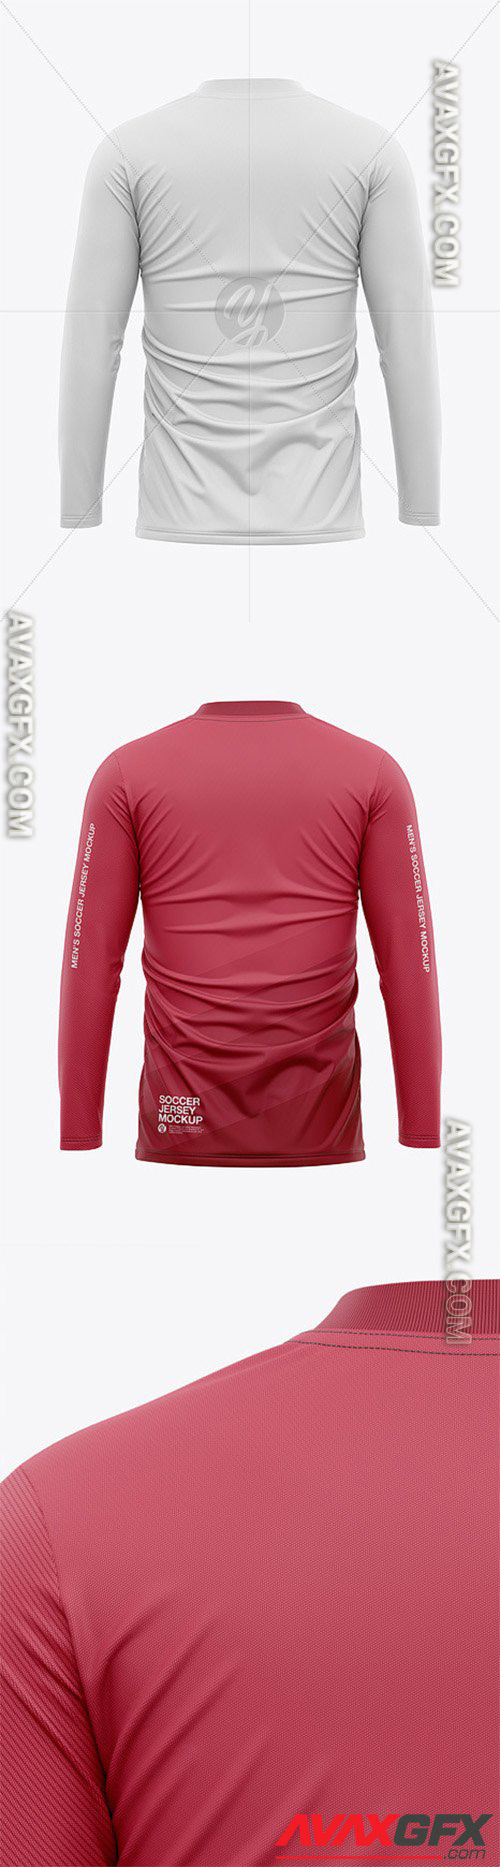 Men’s Long Sleeve Soccer Jersey T-shirt Mockup - Back View - Football Jersey Soccer T-shirt 55708